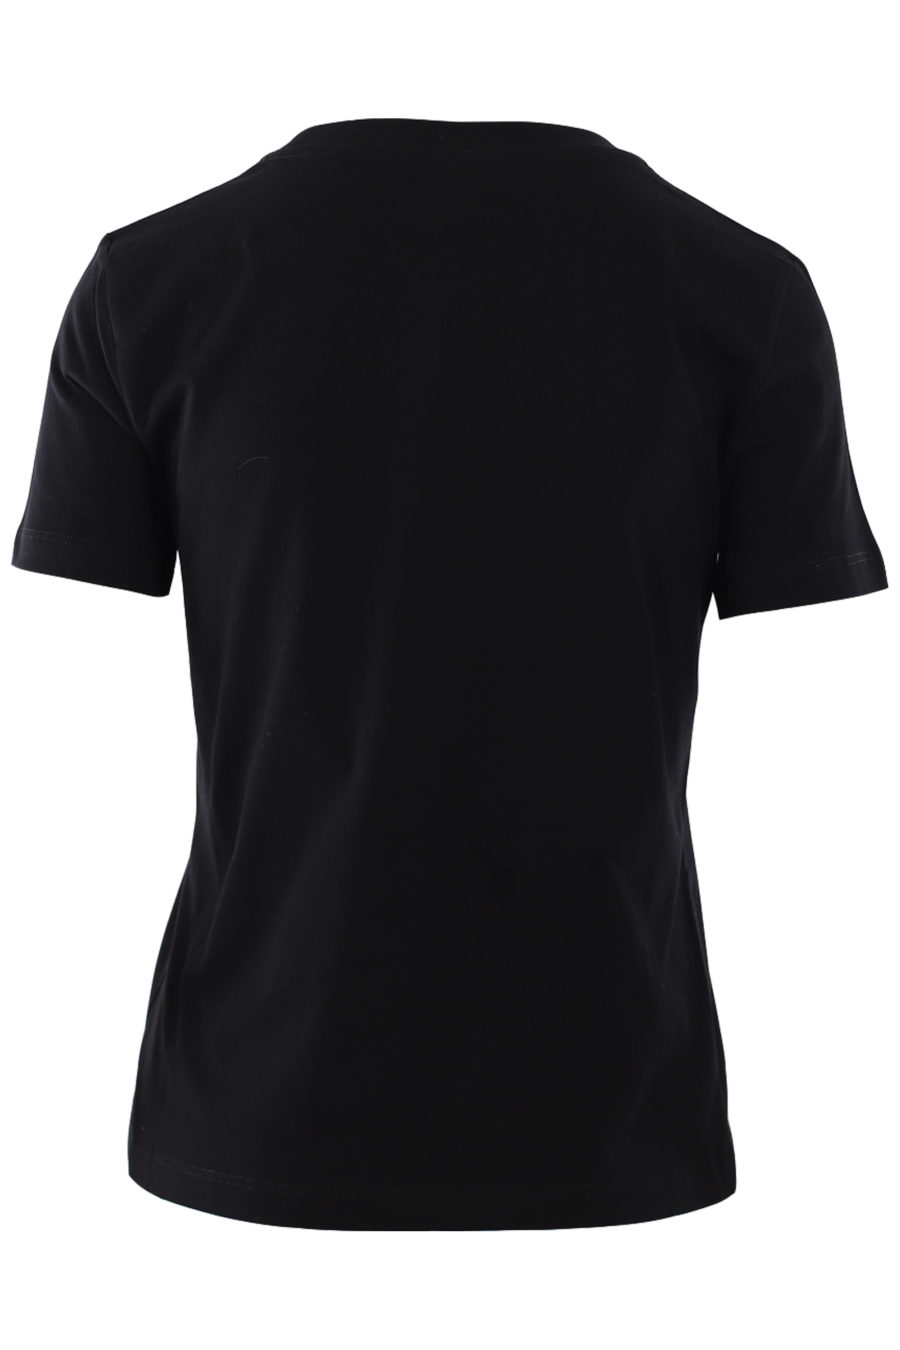 T-shirt noir avec logo tropical - IMG 0820